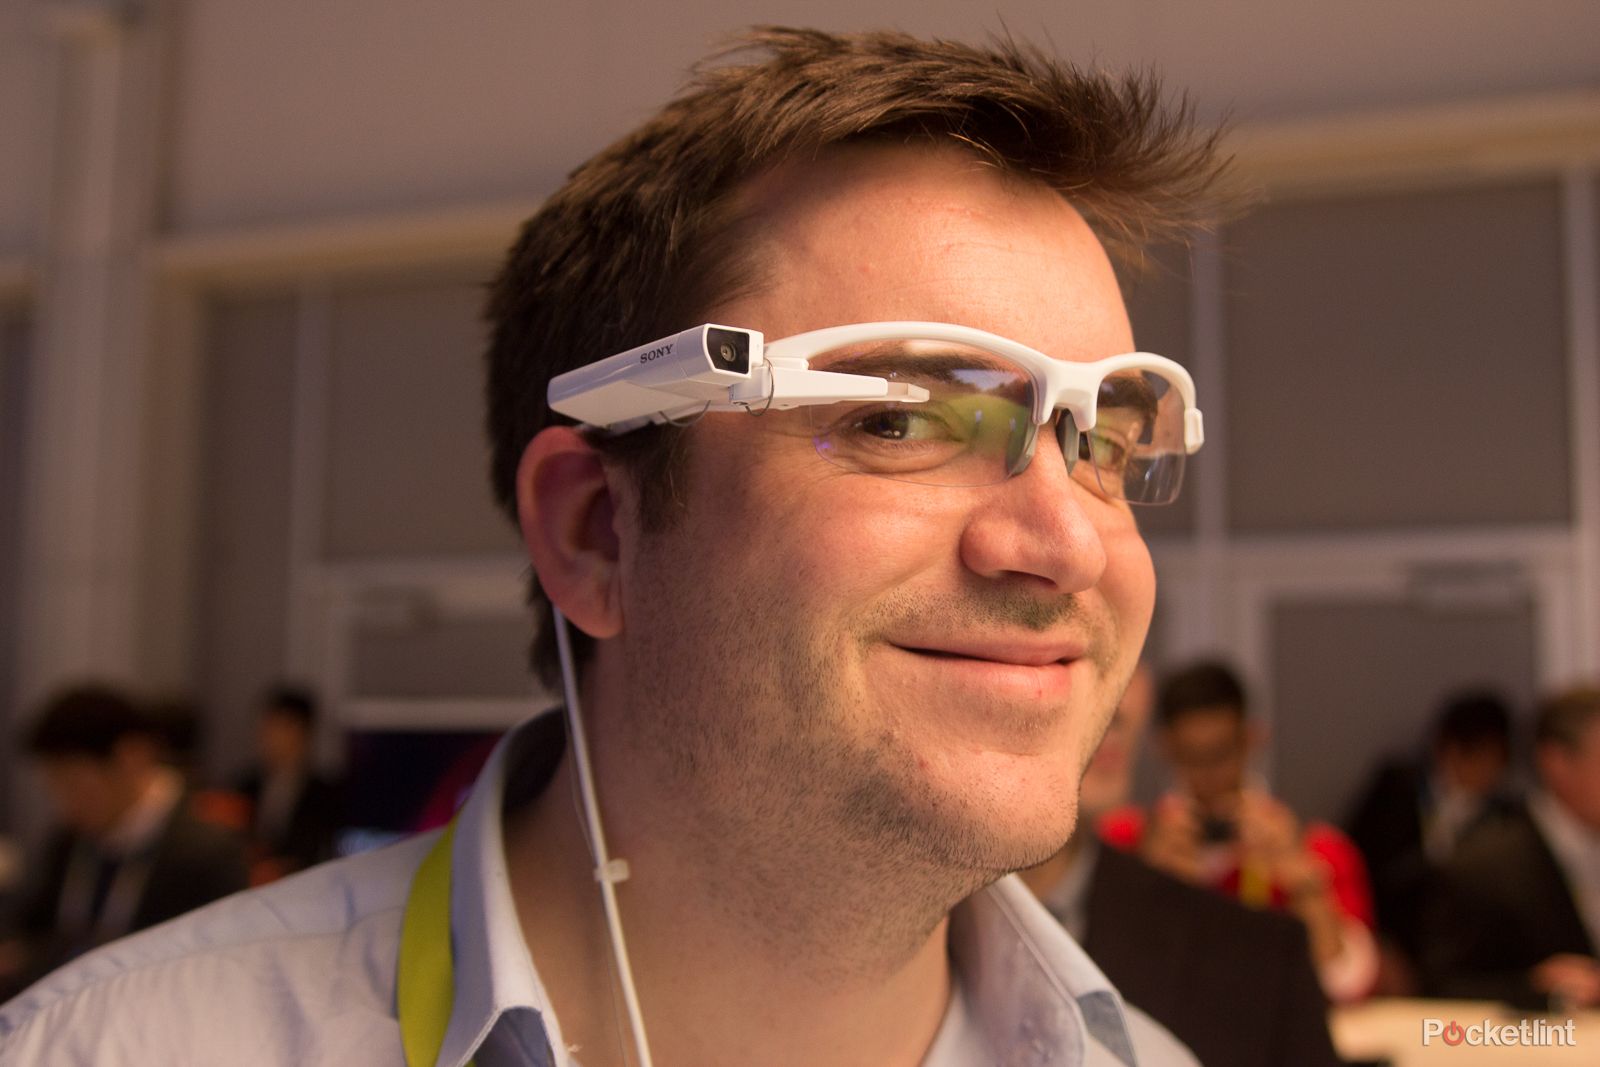 sony smarteyeglass attach takes on google glass image 1